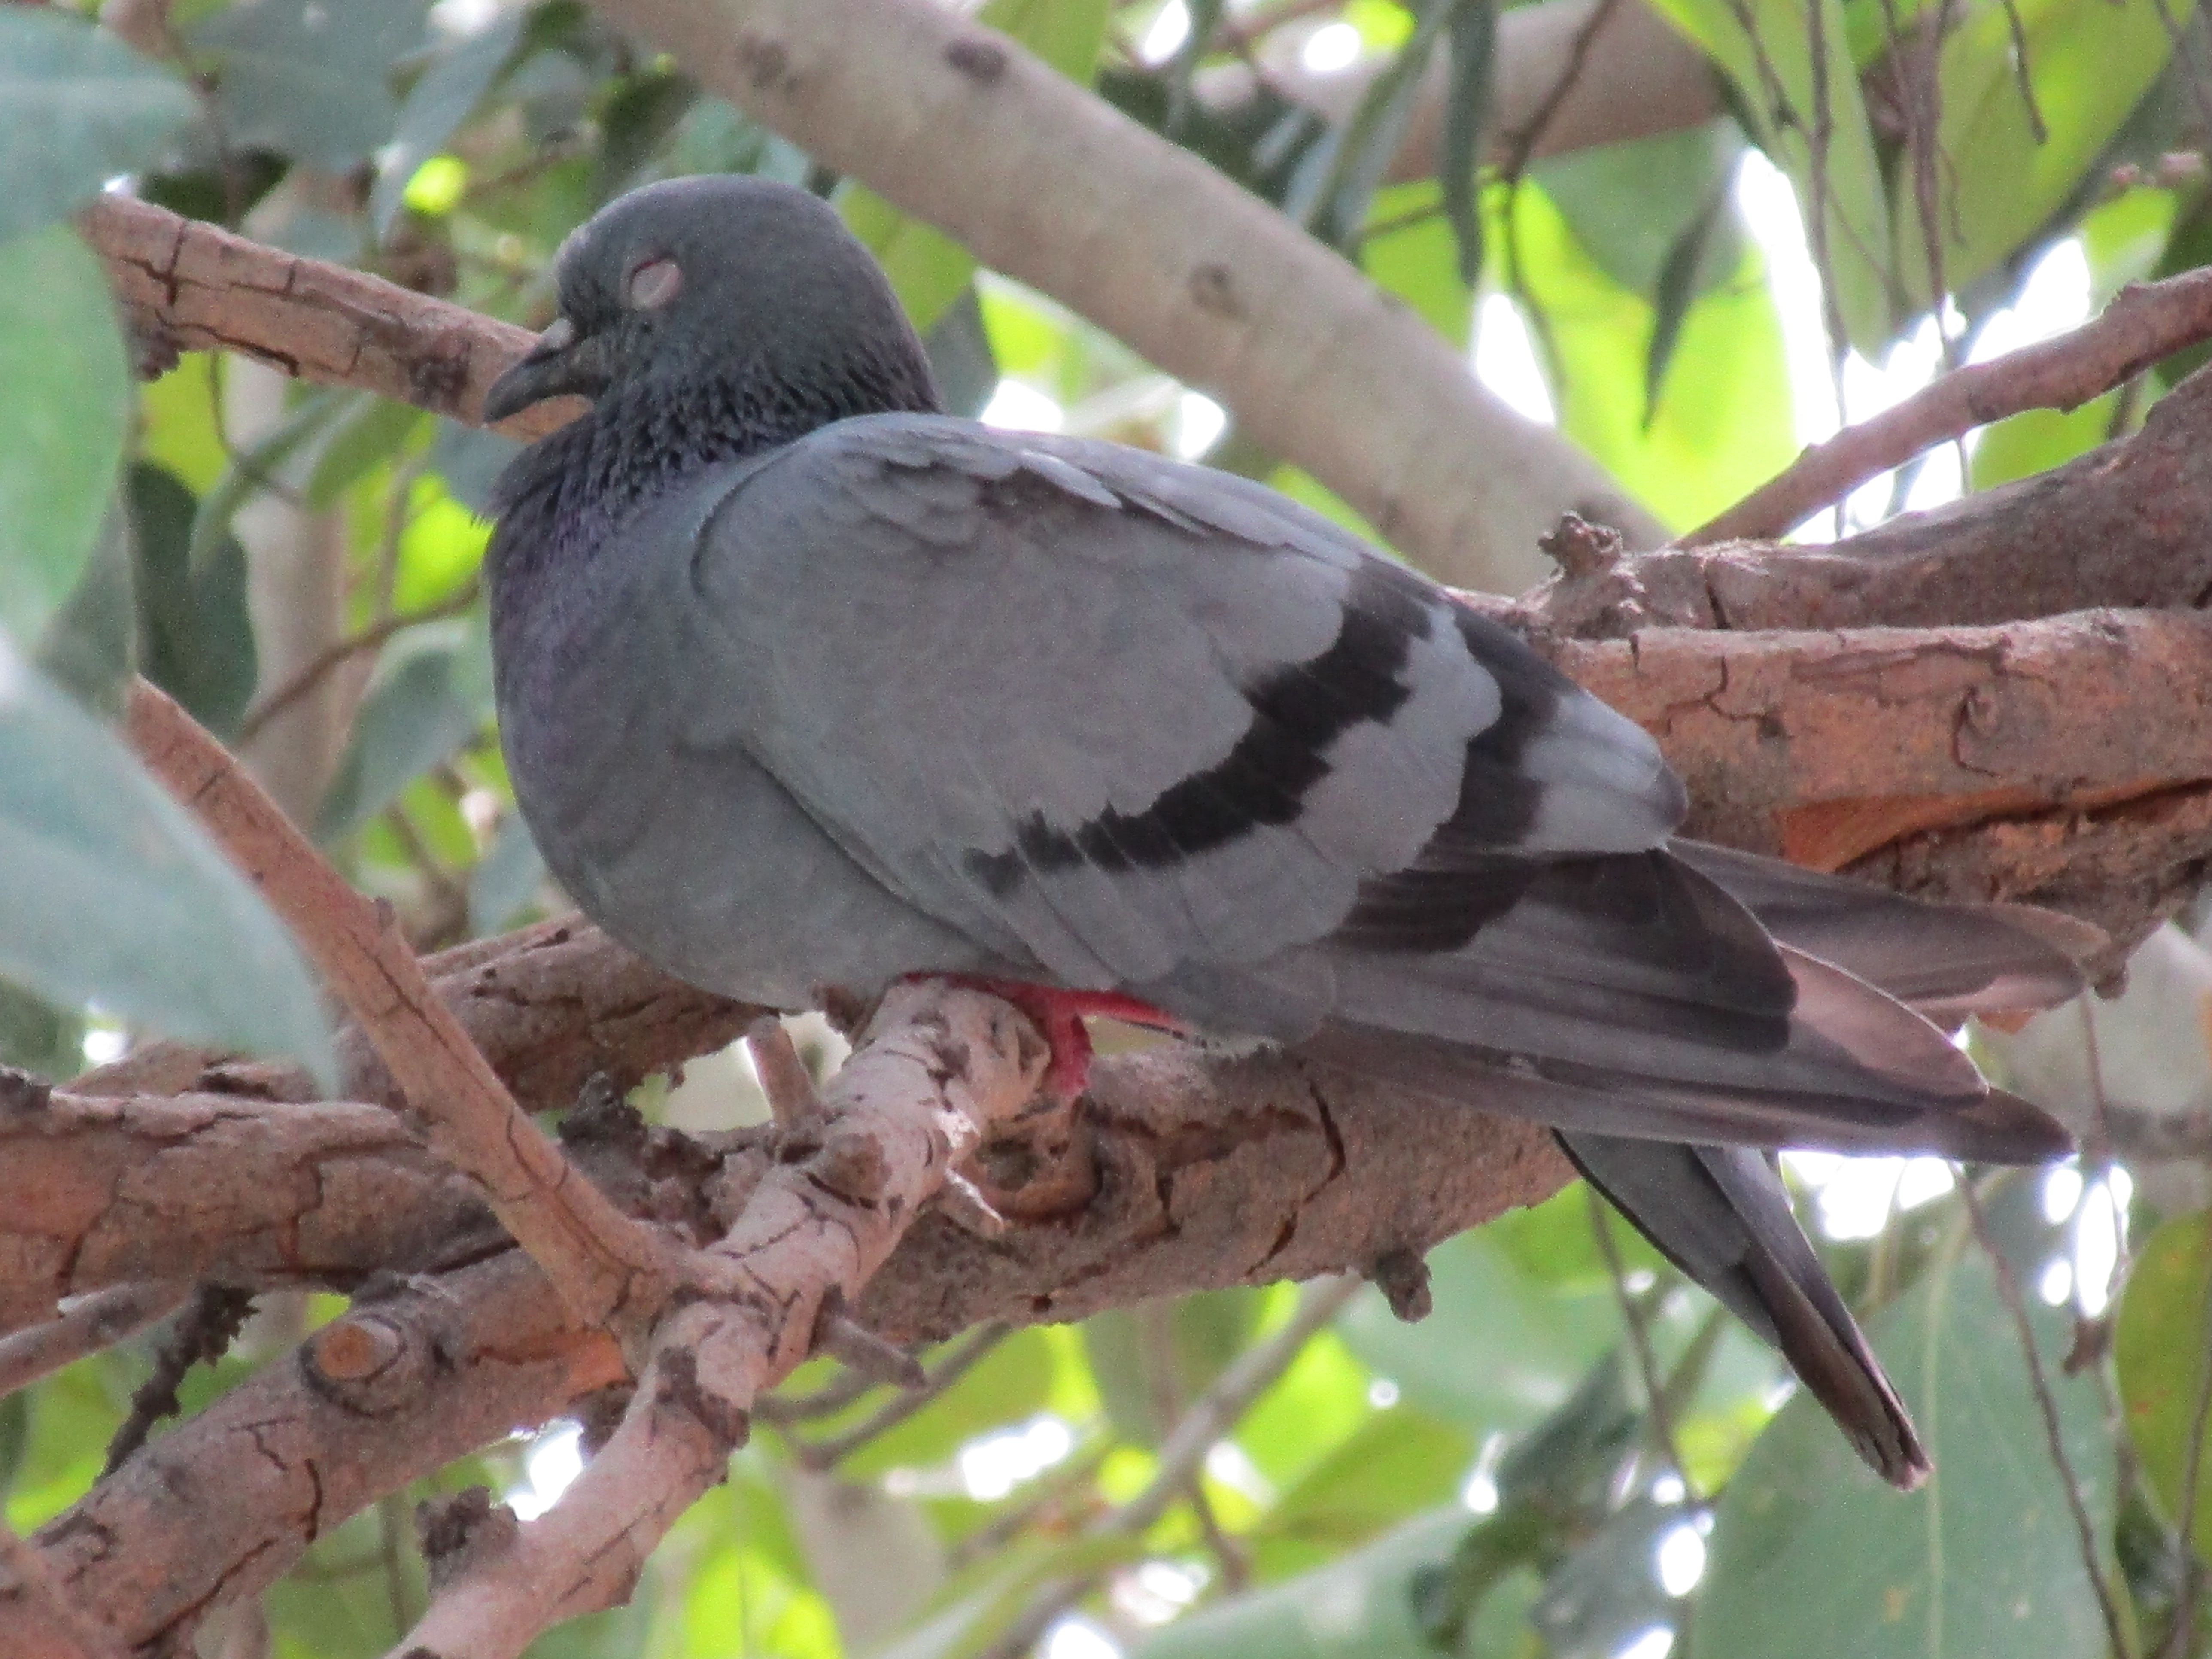 File:Resting pigeon.jpg - Wikimedia Commons